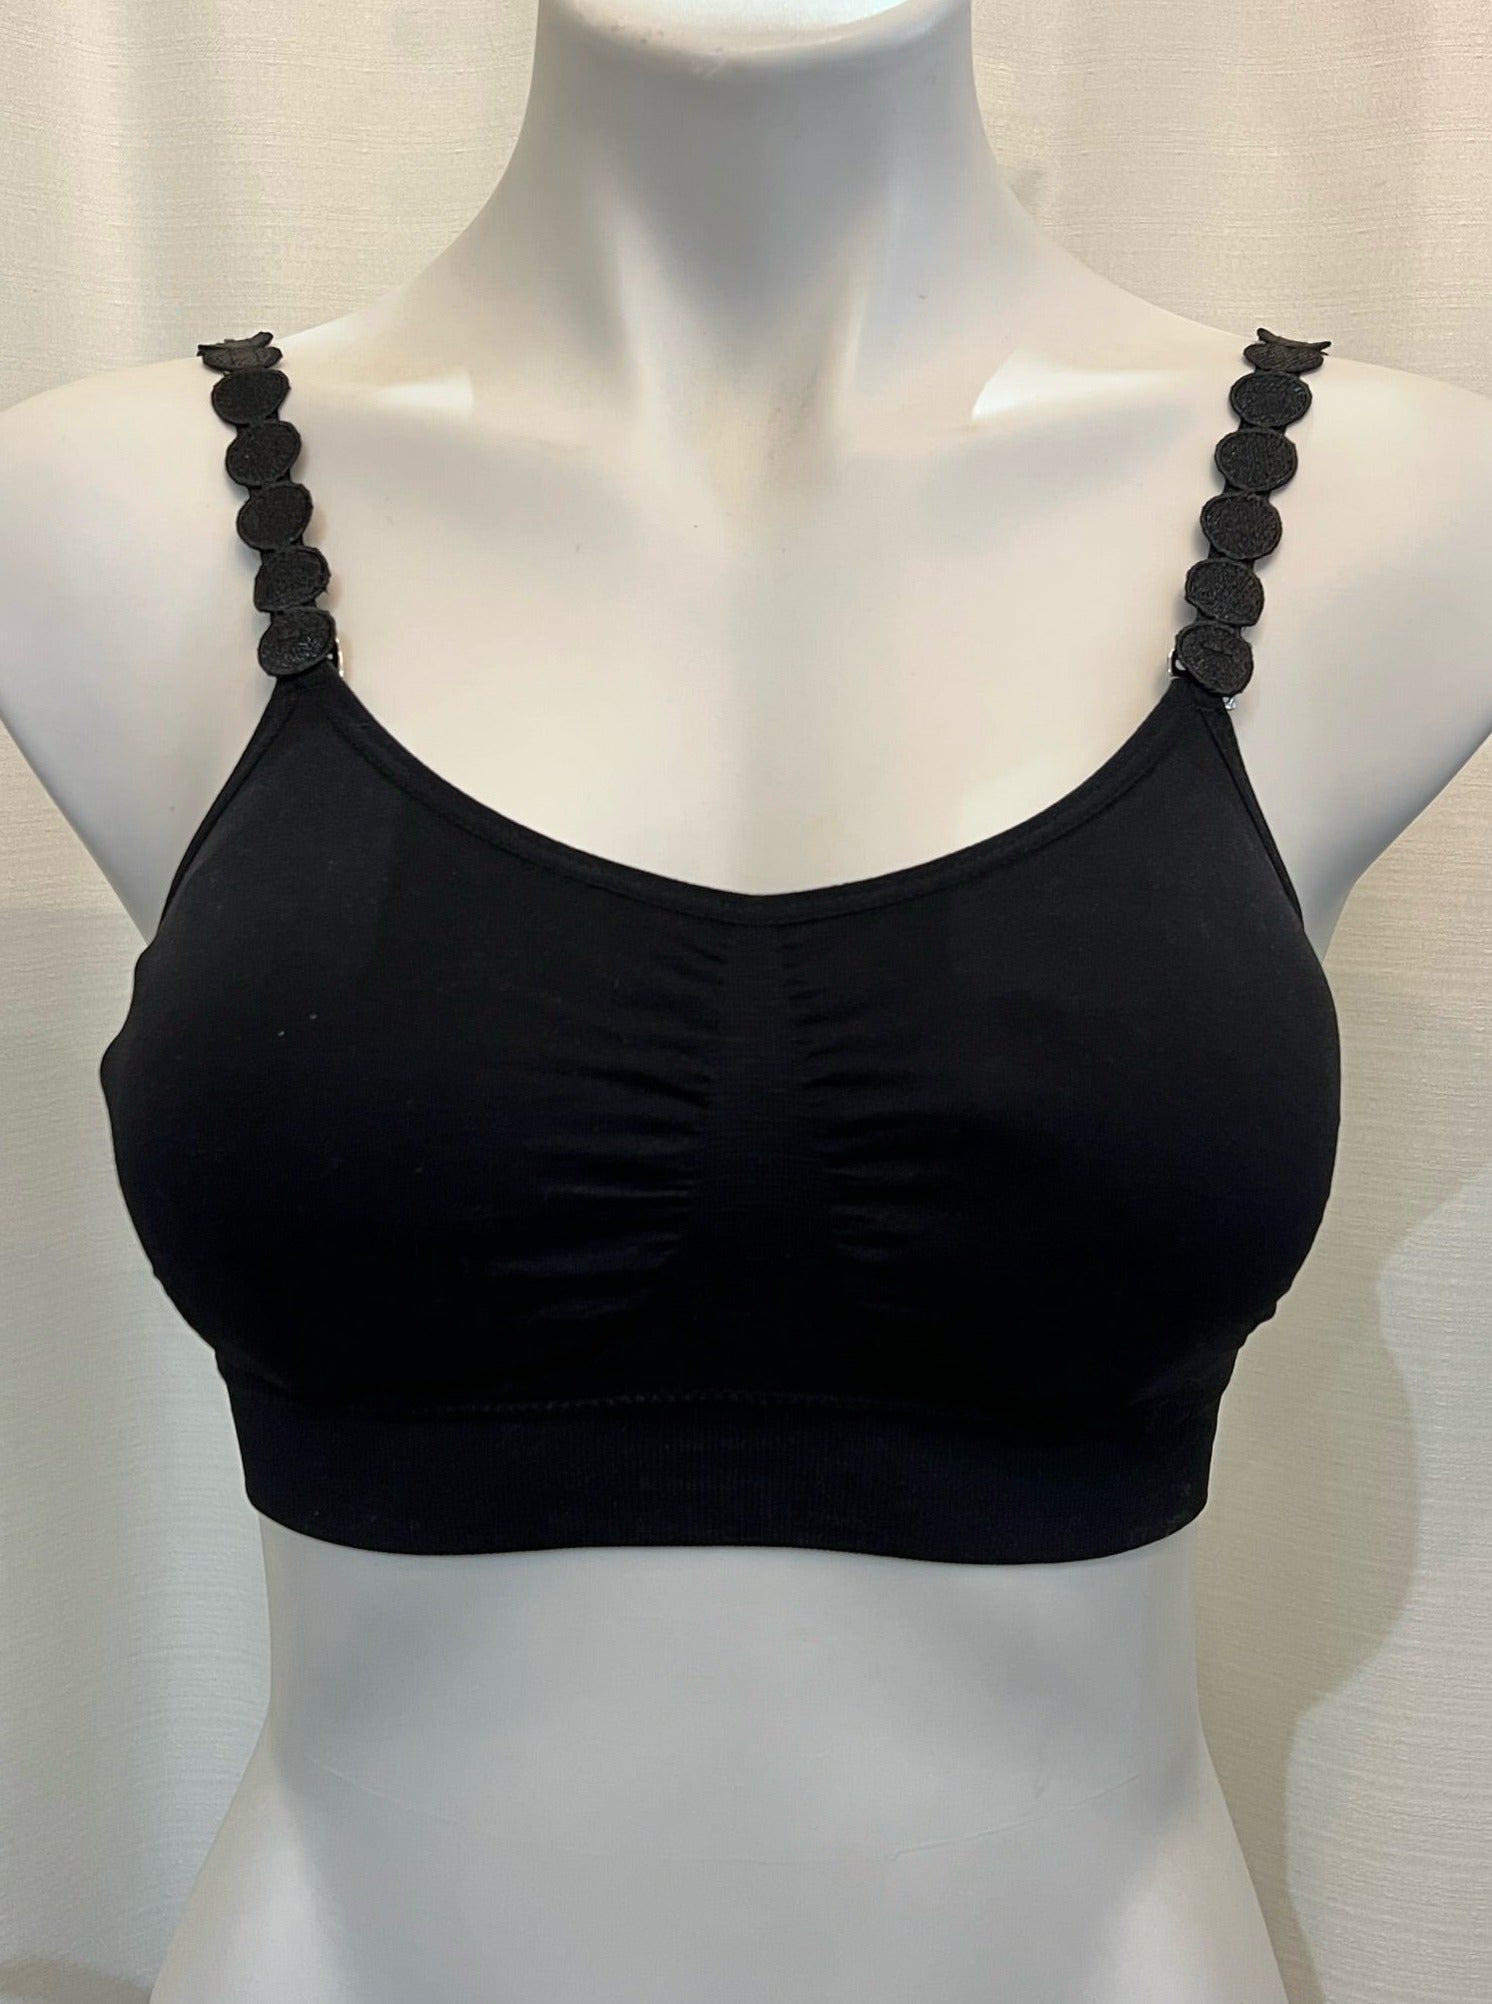 StrapITS adjustable strap bra with black circle straps